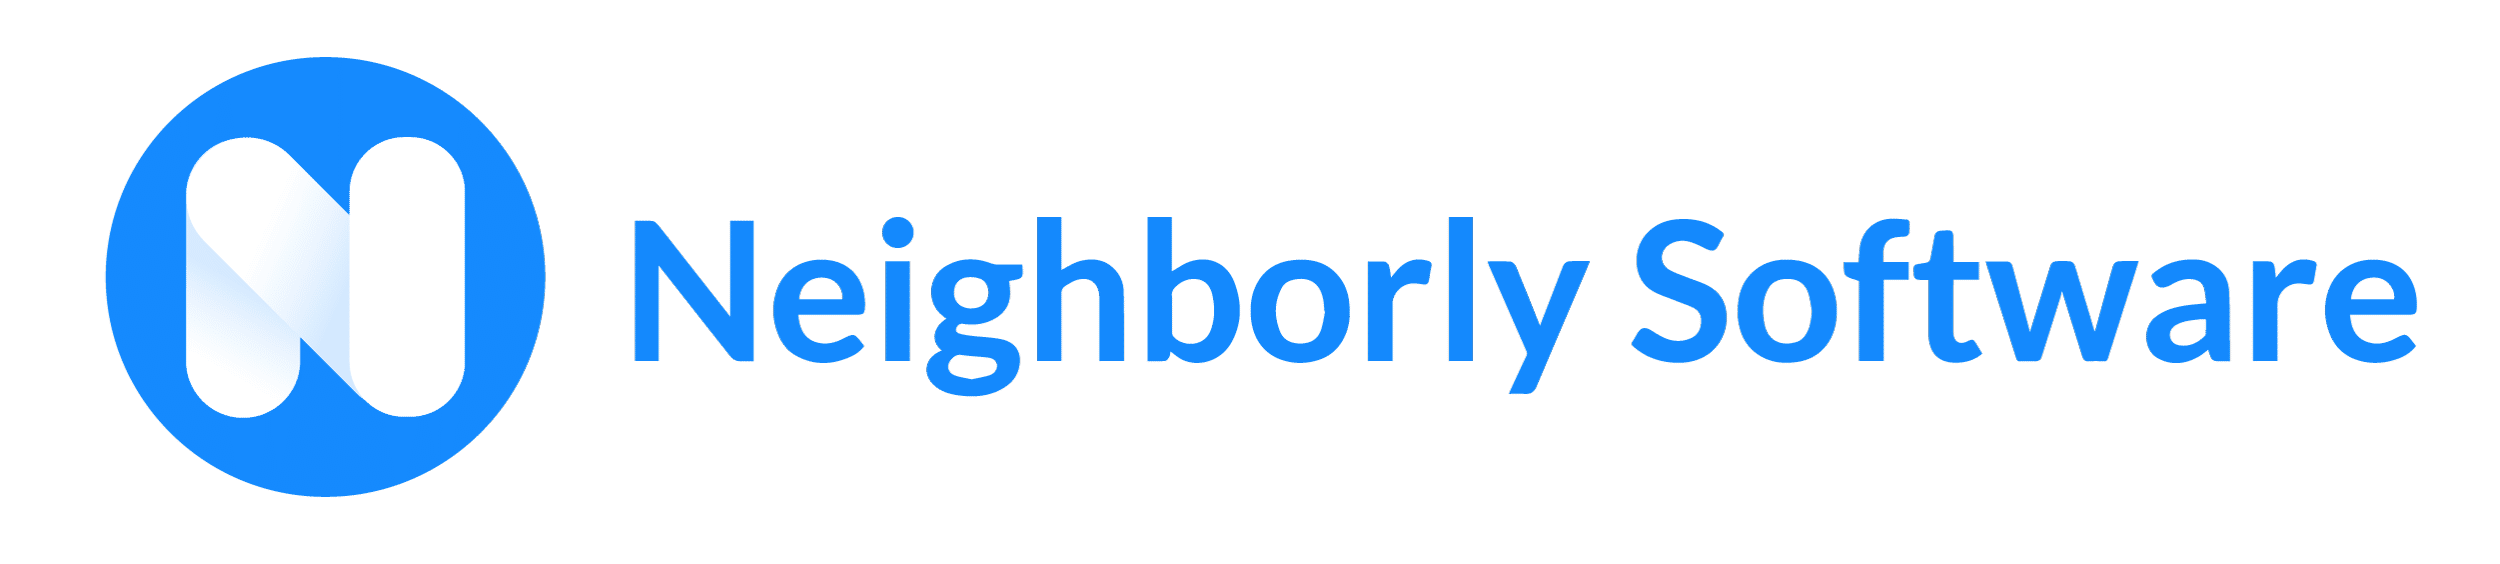 Neighborly Software Logo